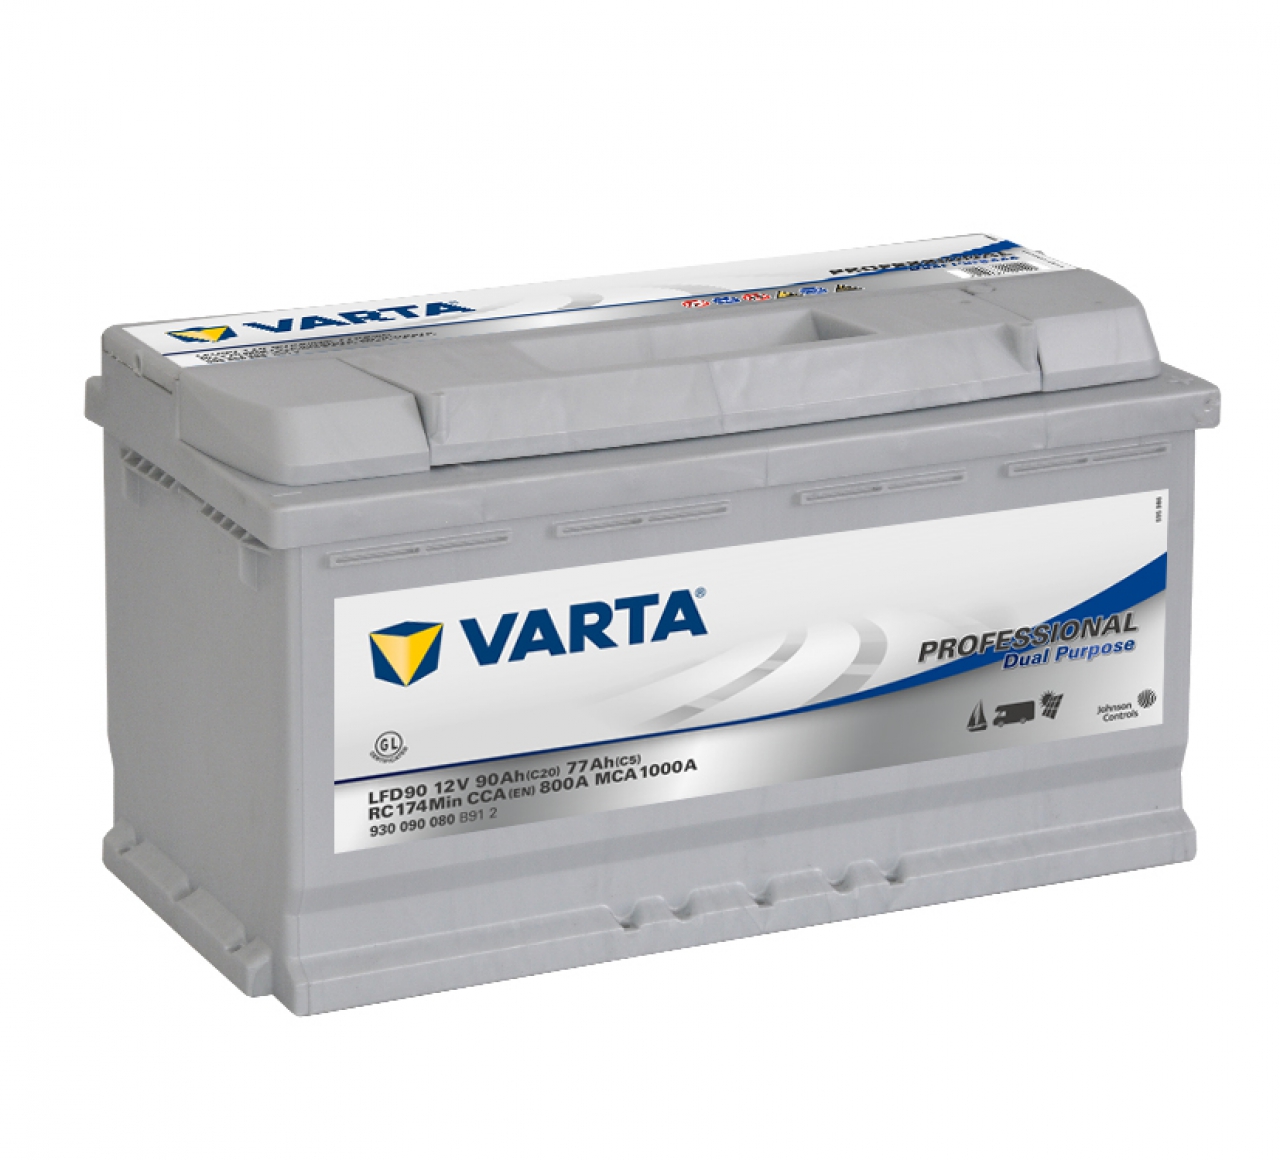 VARTA Professional Dual Purpose LFD90